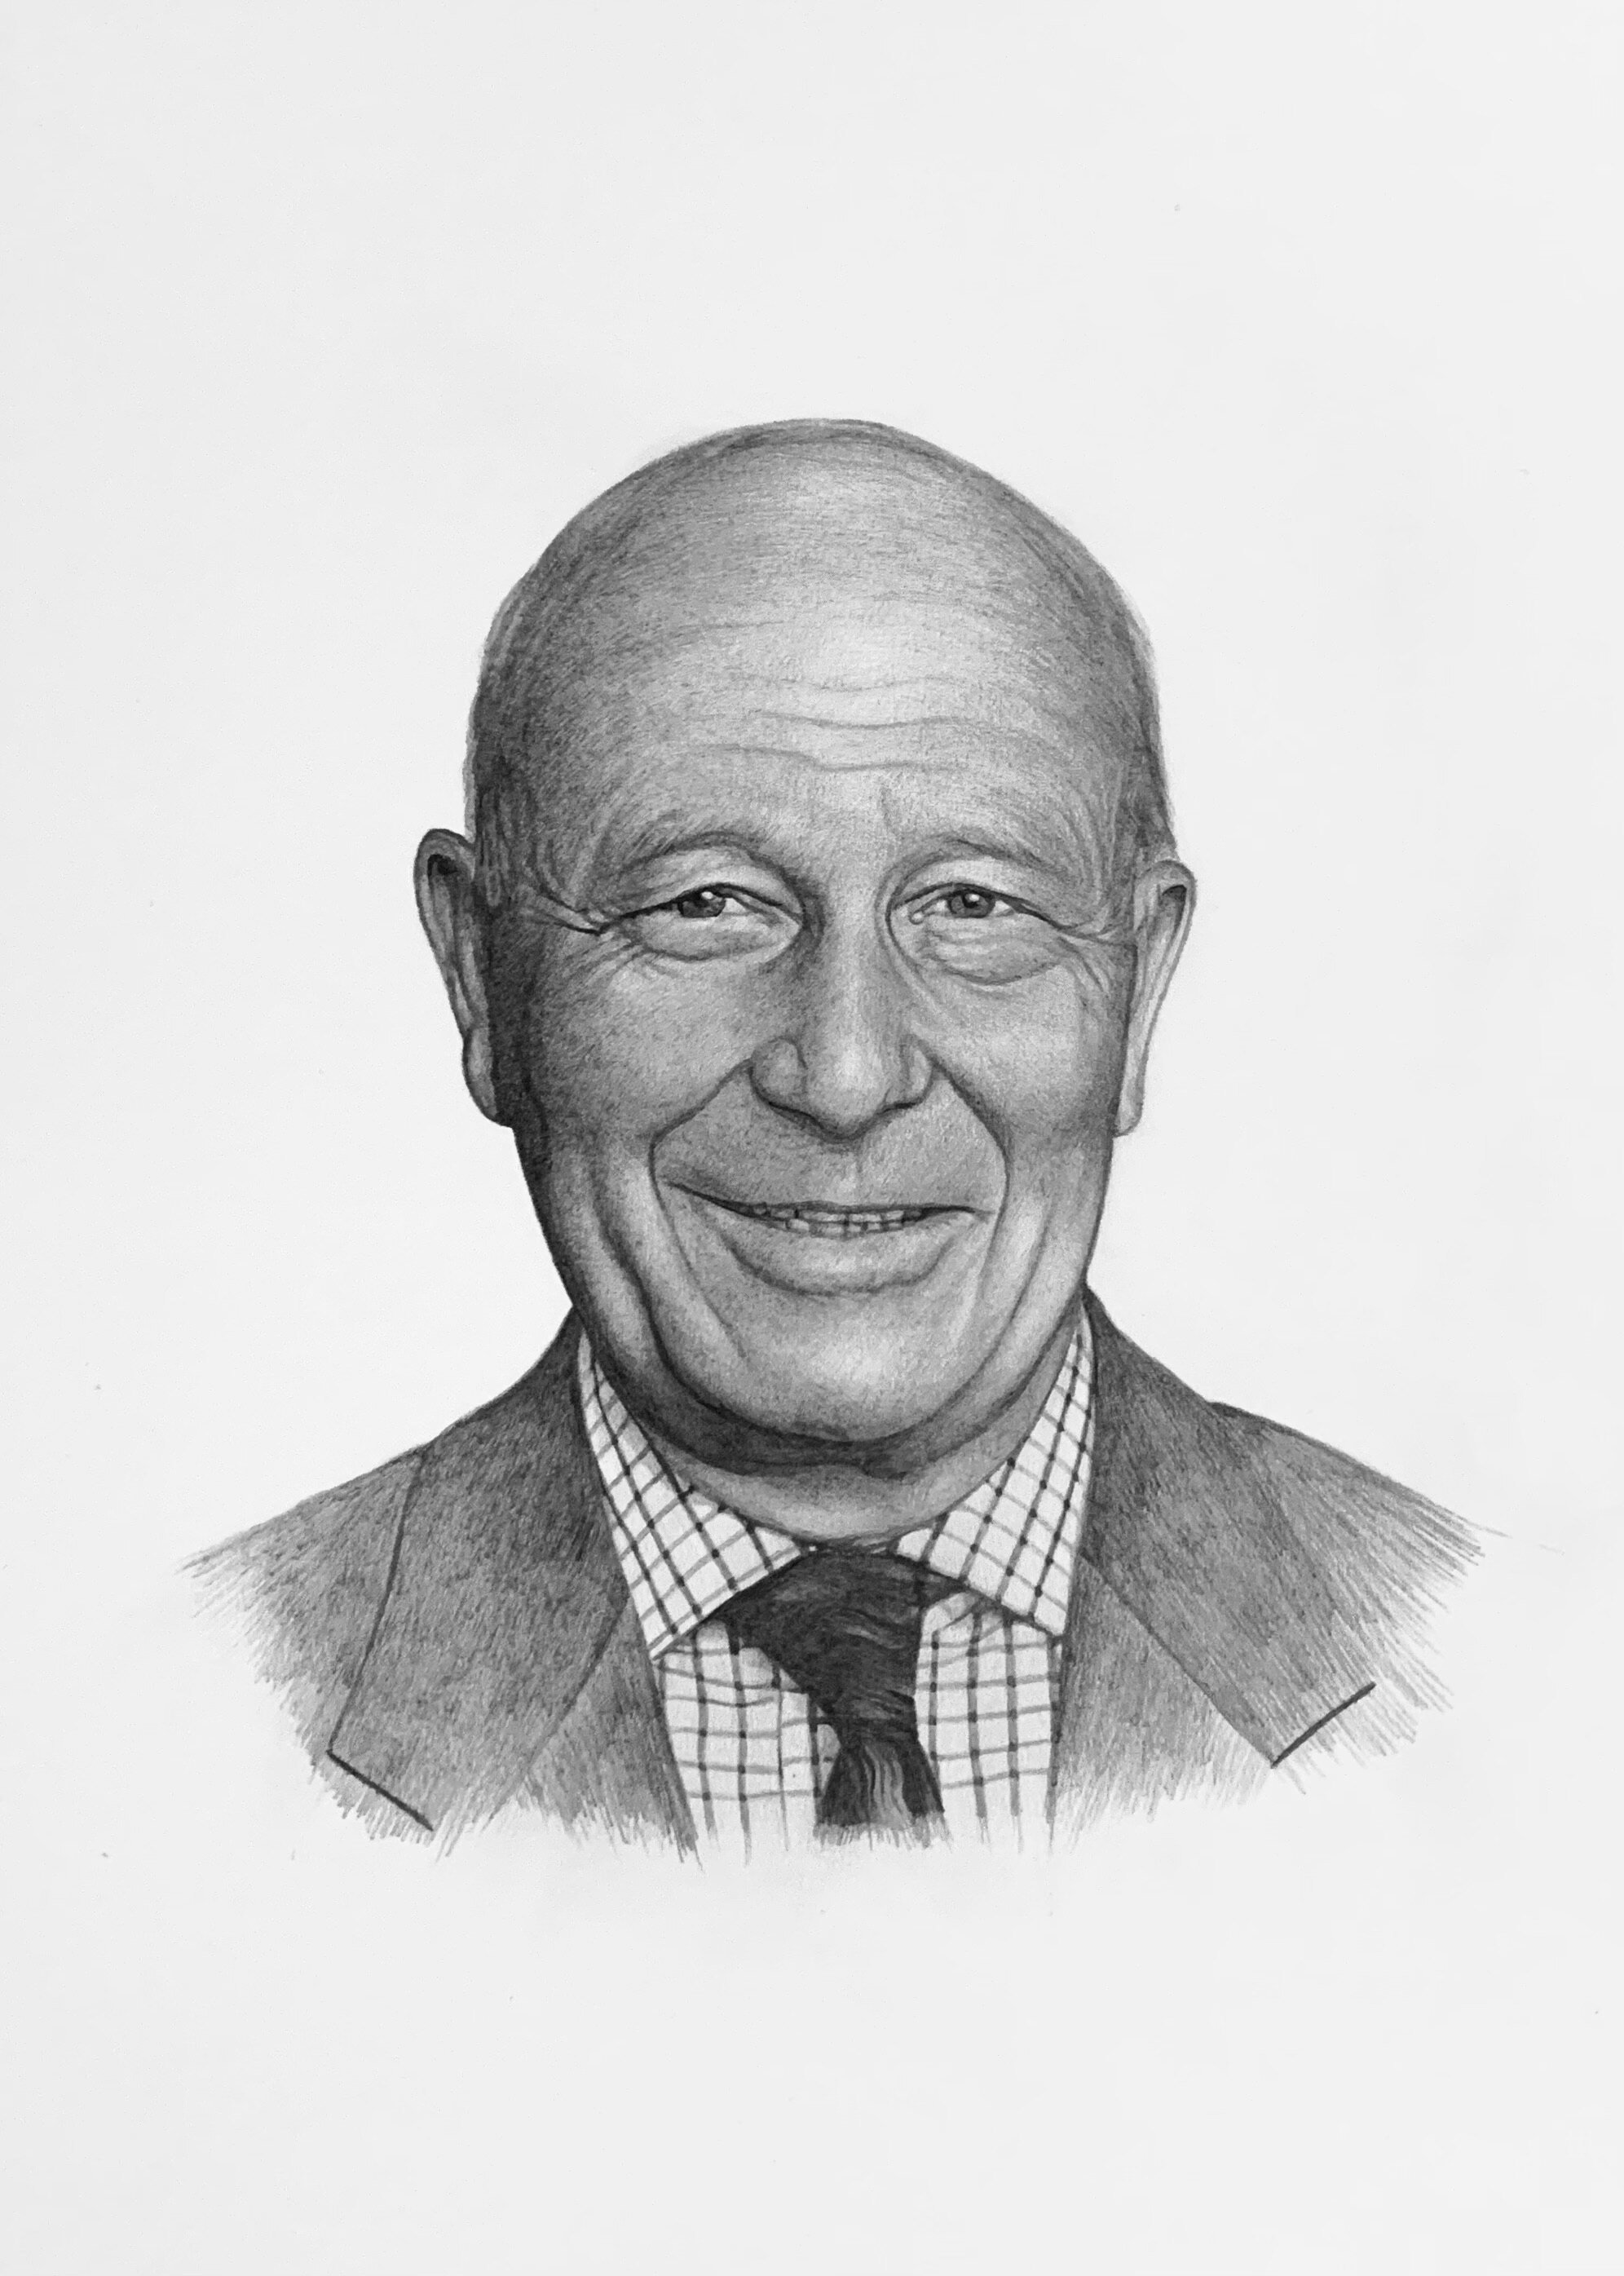 Hand Drawn Pencil Portrait of Man